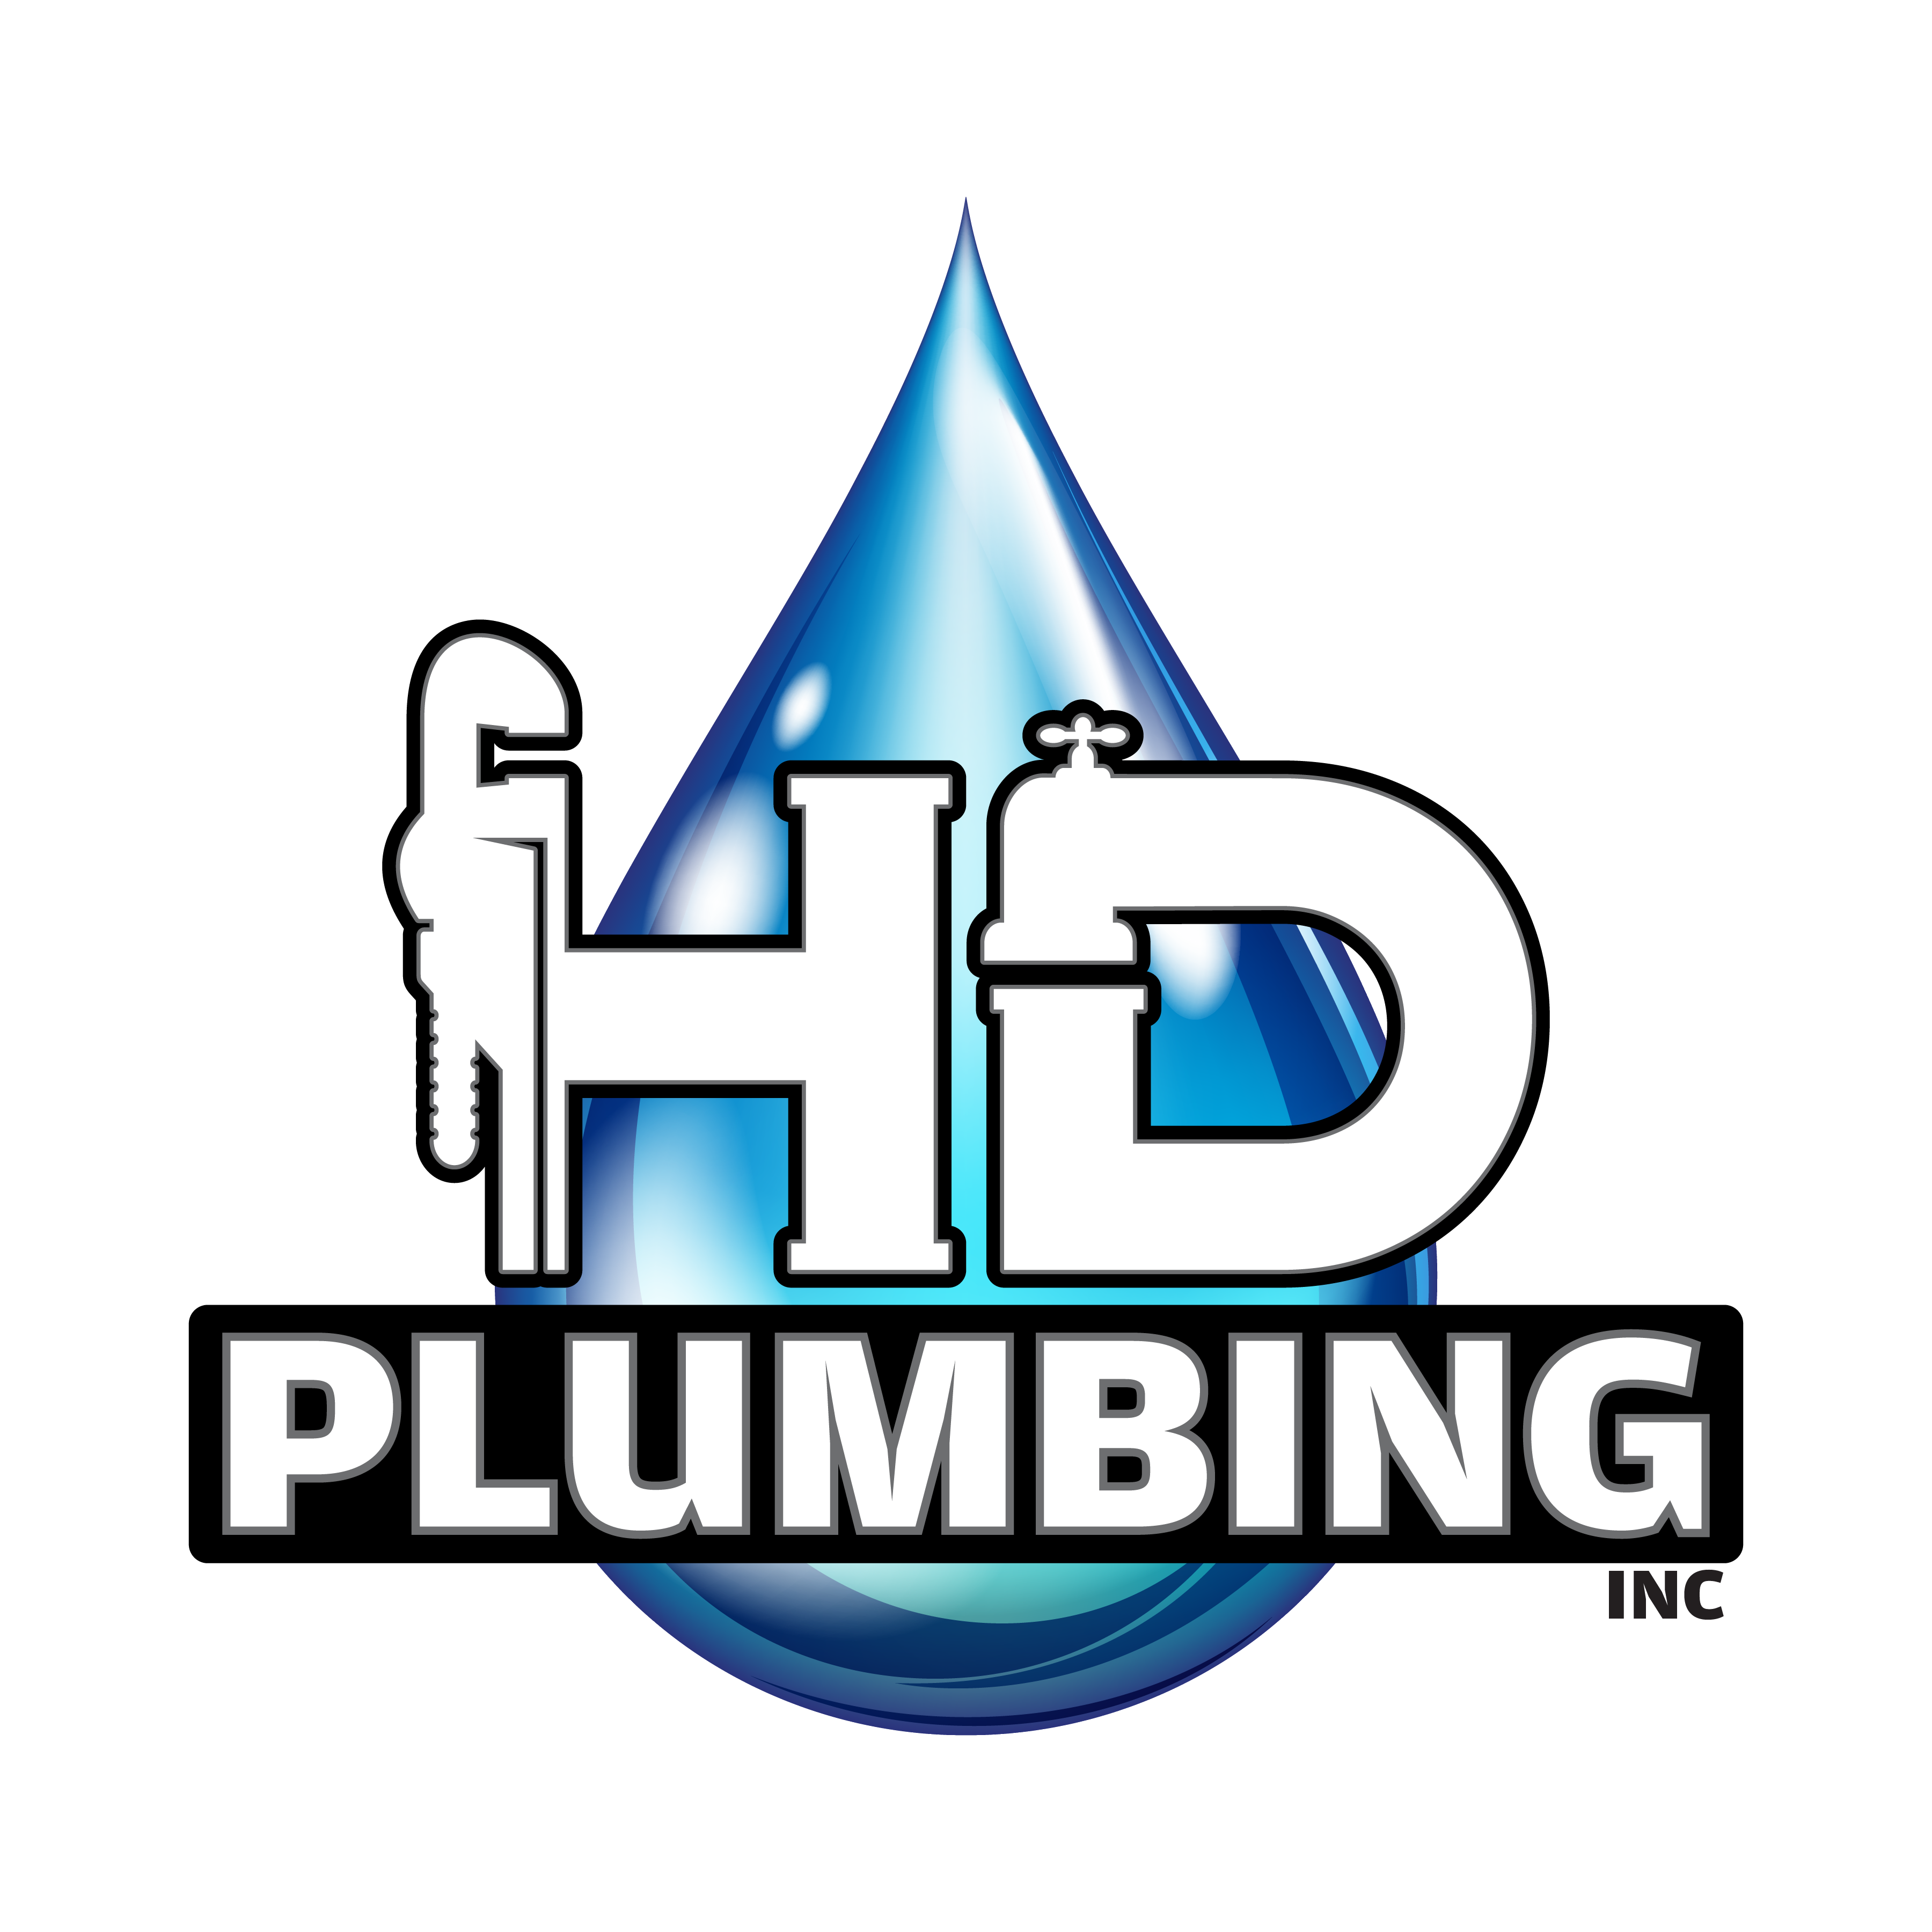 HD Plumbing INC Logo